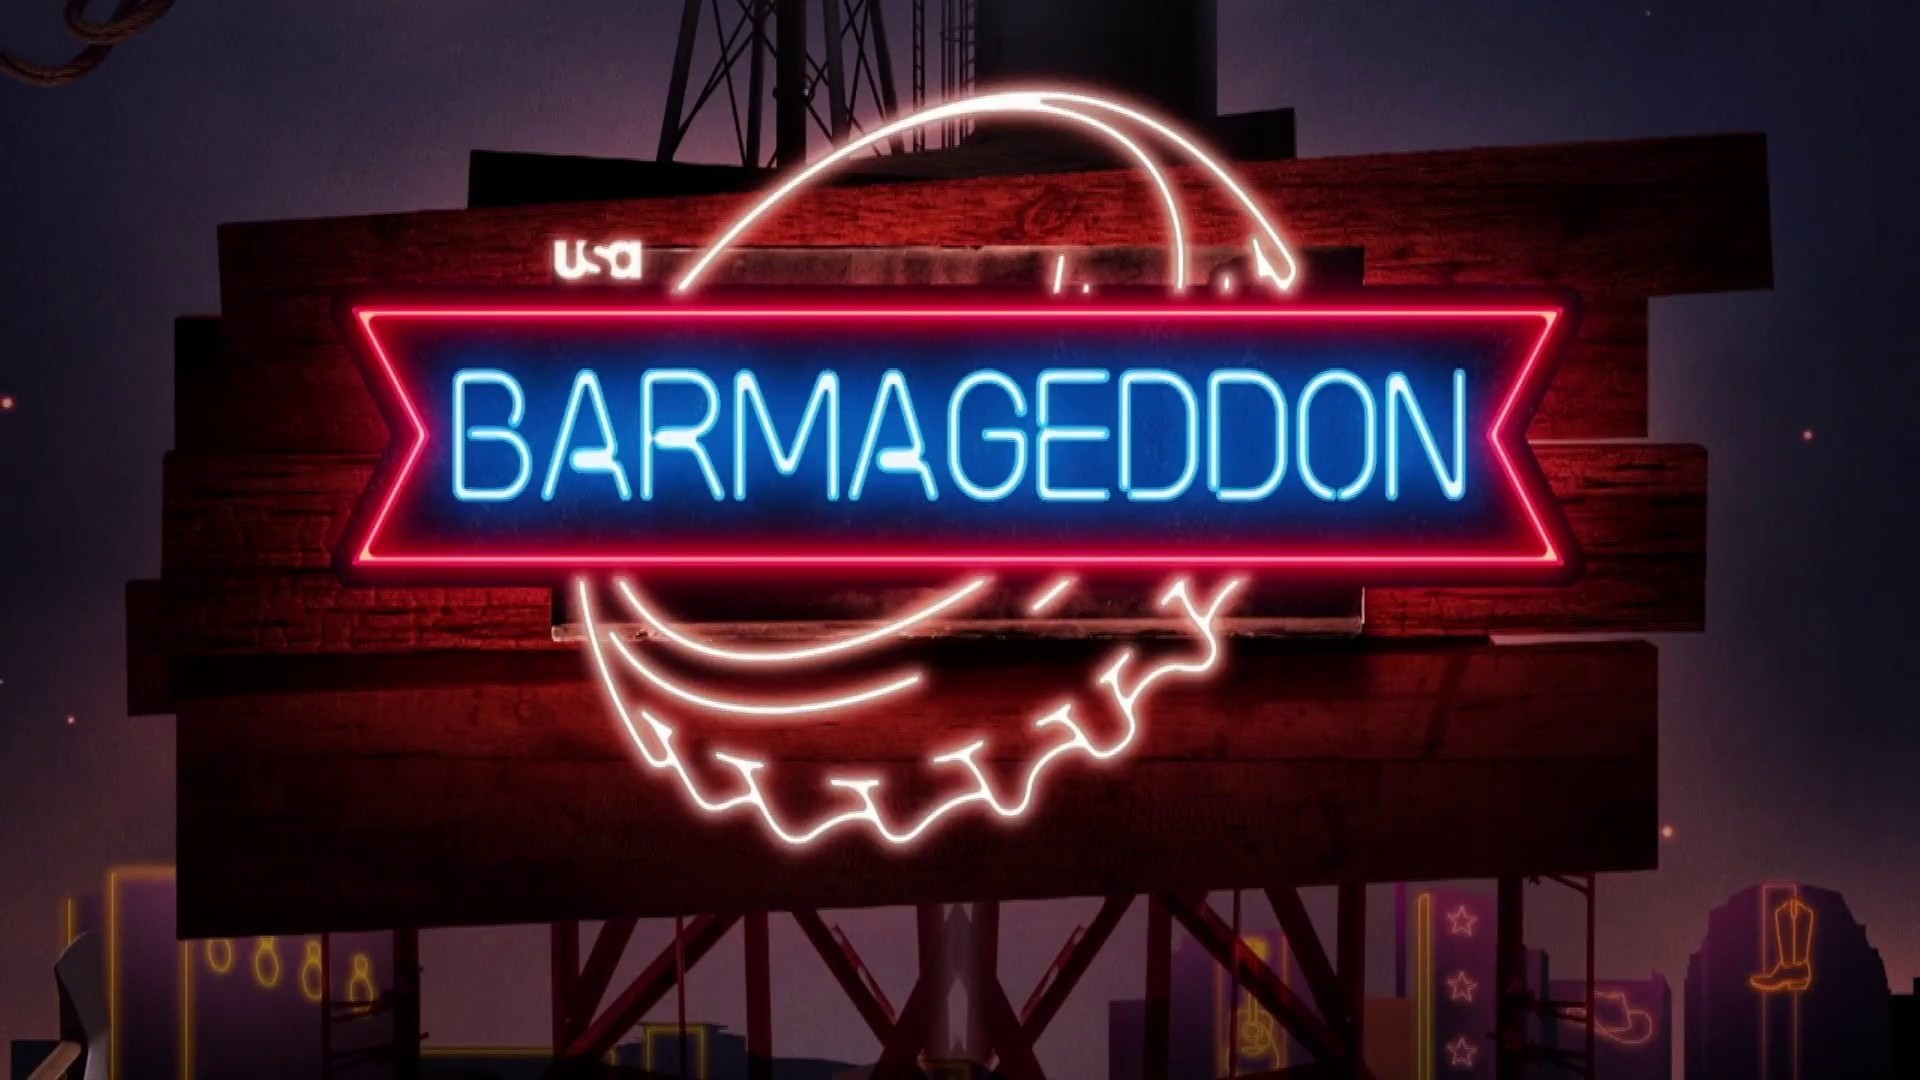 Blake Shelton's Barmageddon Has a Holiday Episode Coming